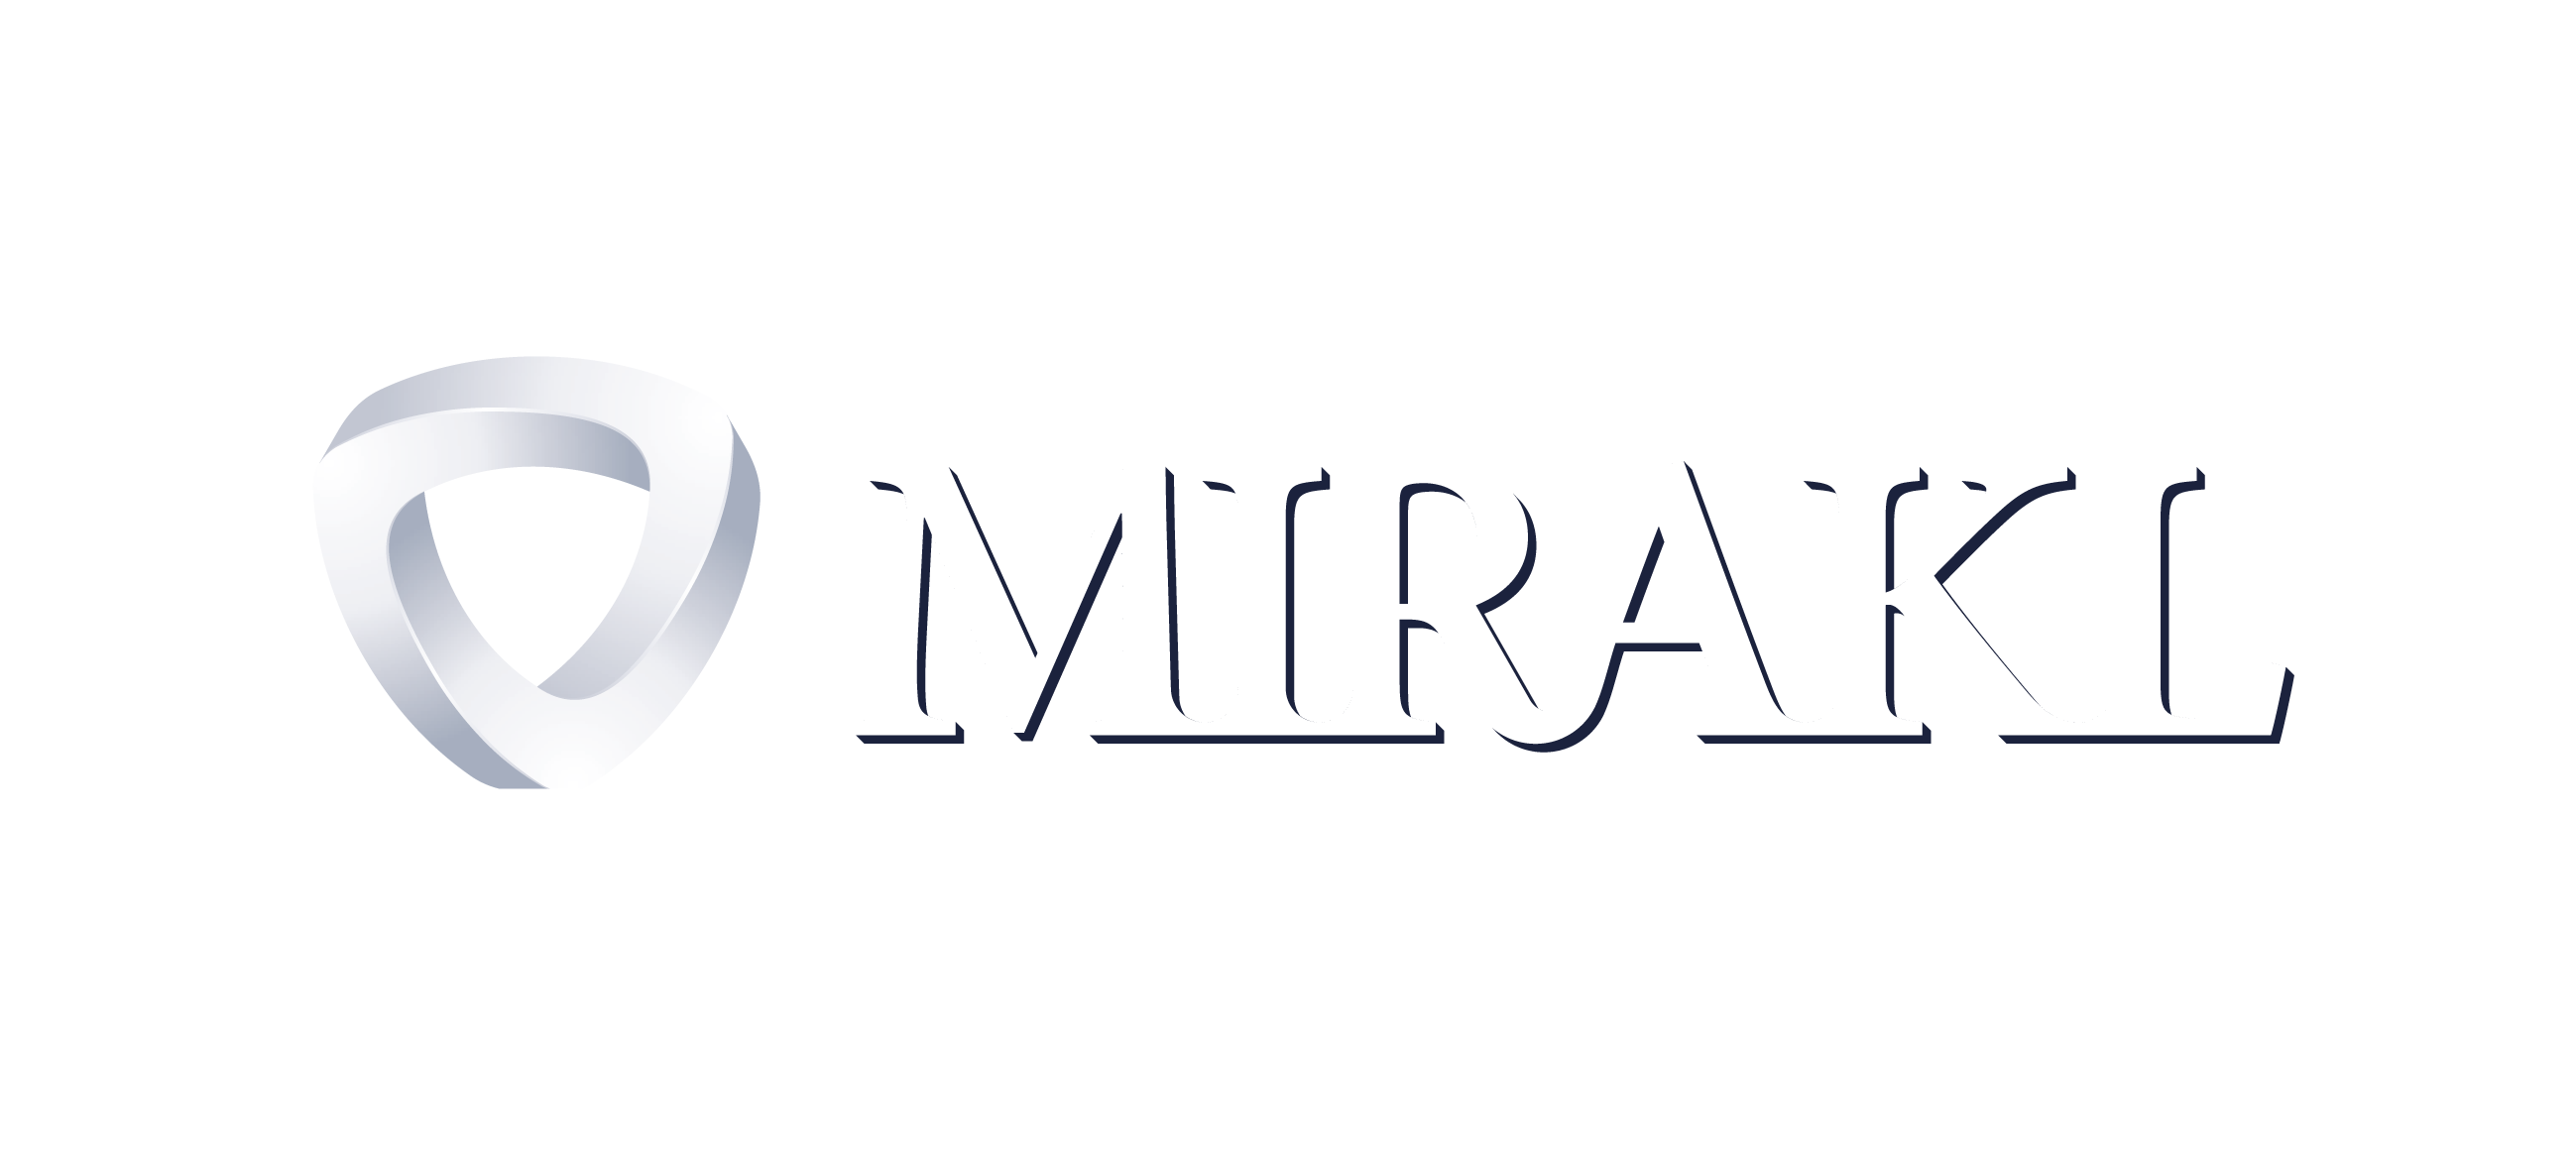 Mirakl-logo